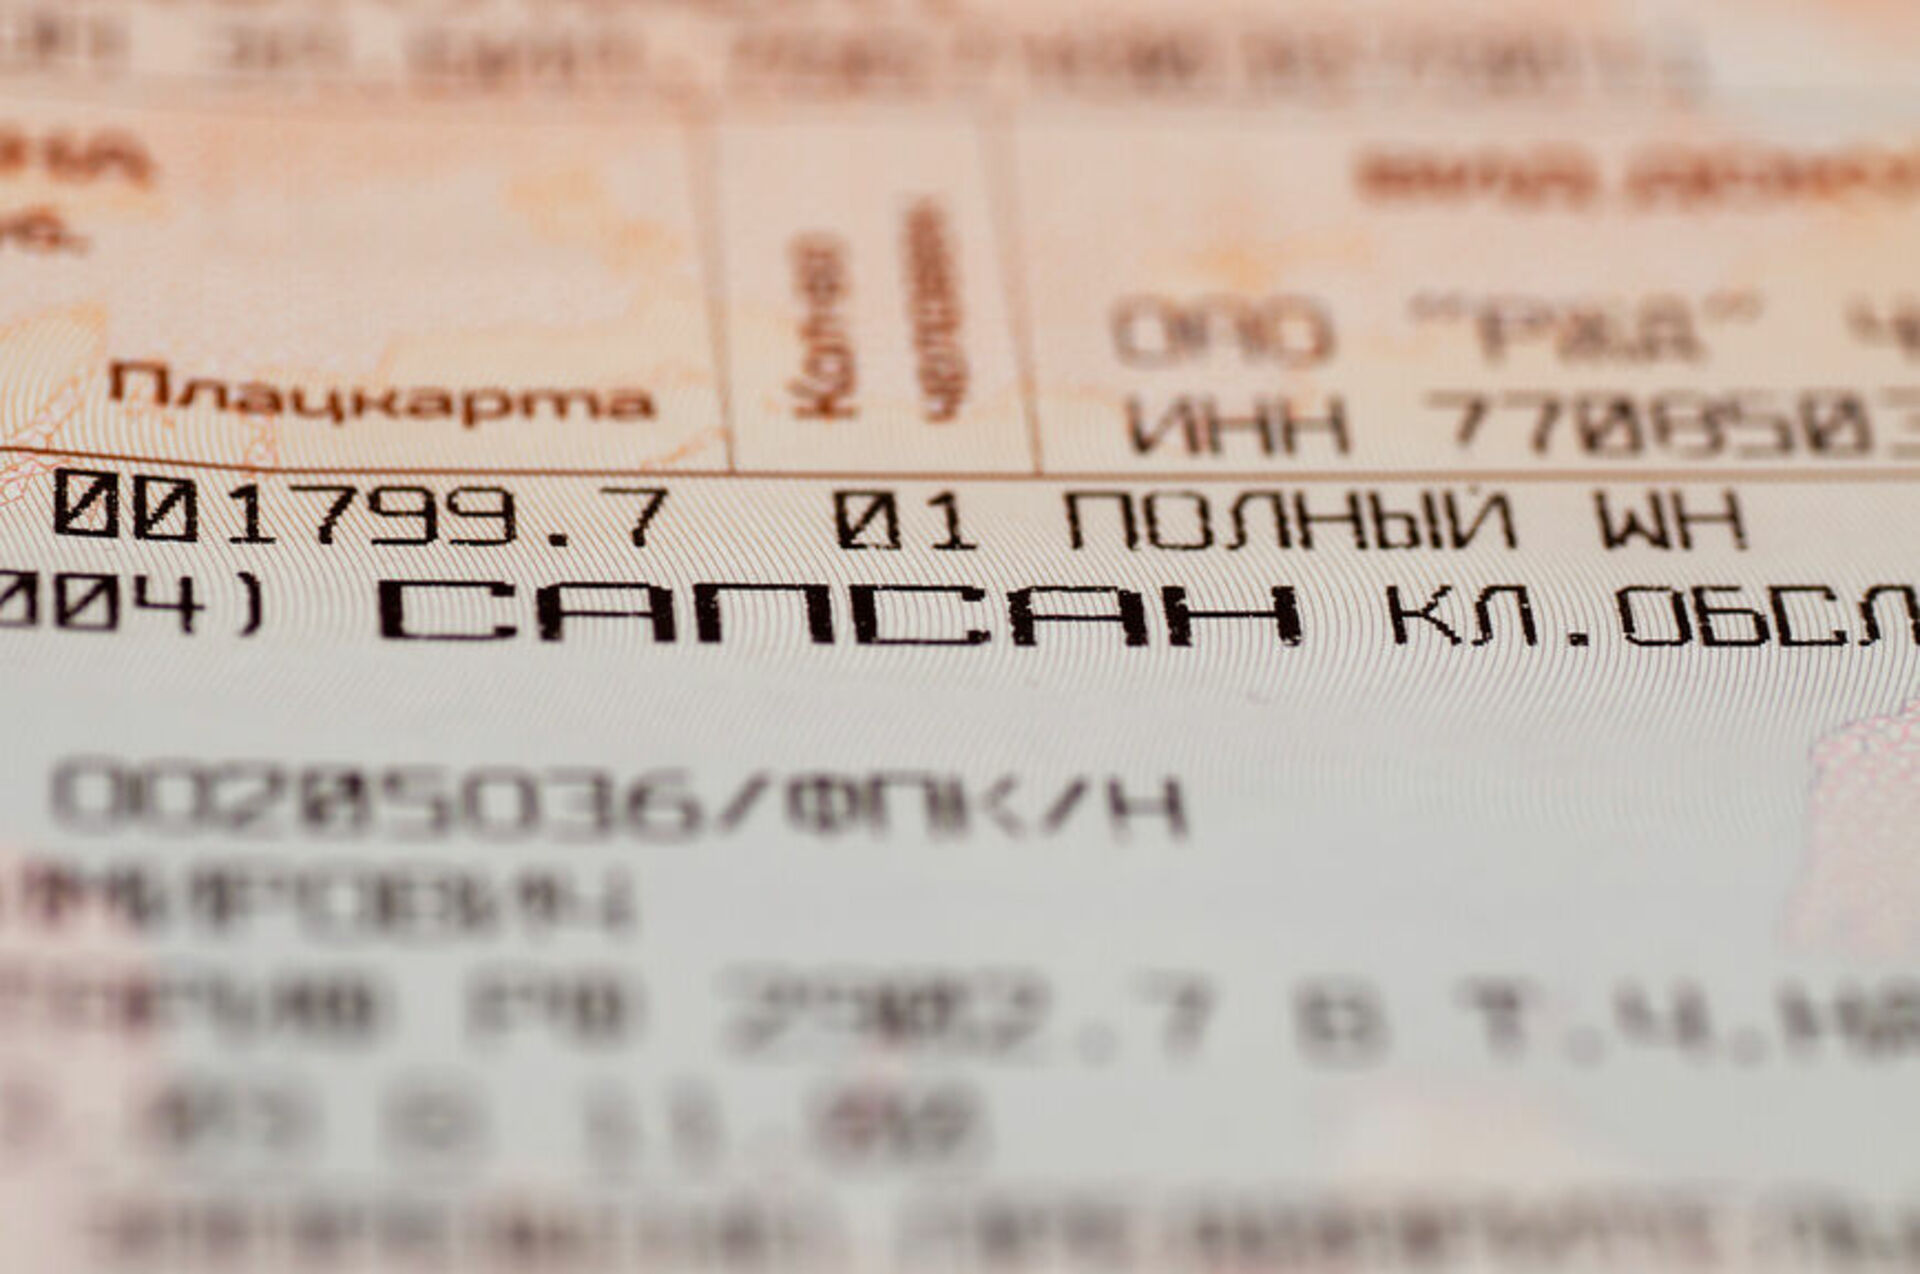 Москва питер сапсан дешевые билеты цена. Сапсан билеты. Билет на поезд. Фотография билета на поезд. Билеты в Питер.